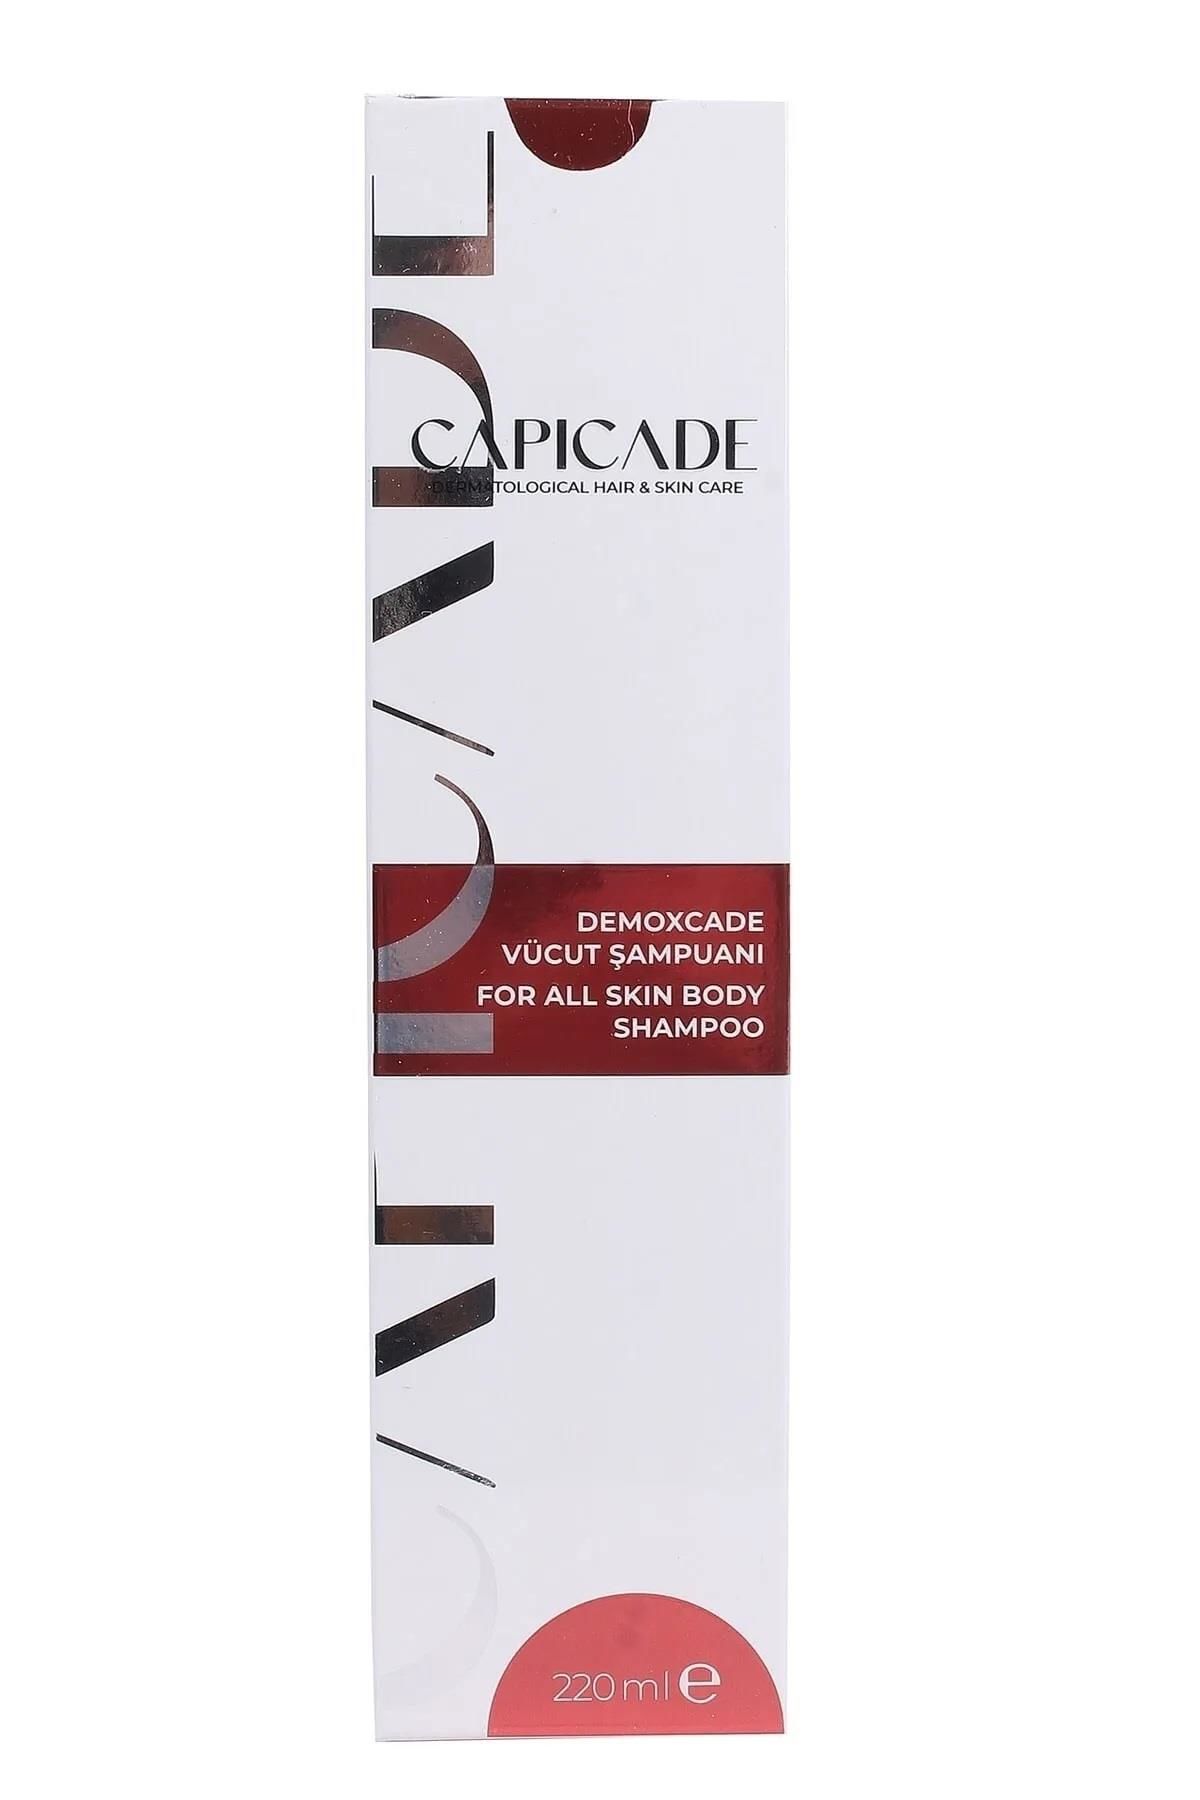 Capicade Demoxcade Vücut Şampuanı 220ml(yeni Ambalaj)